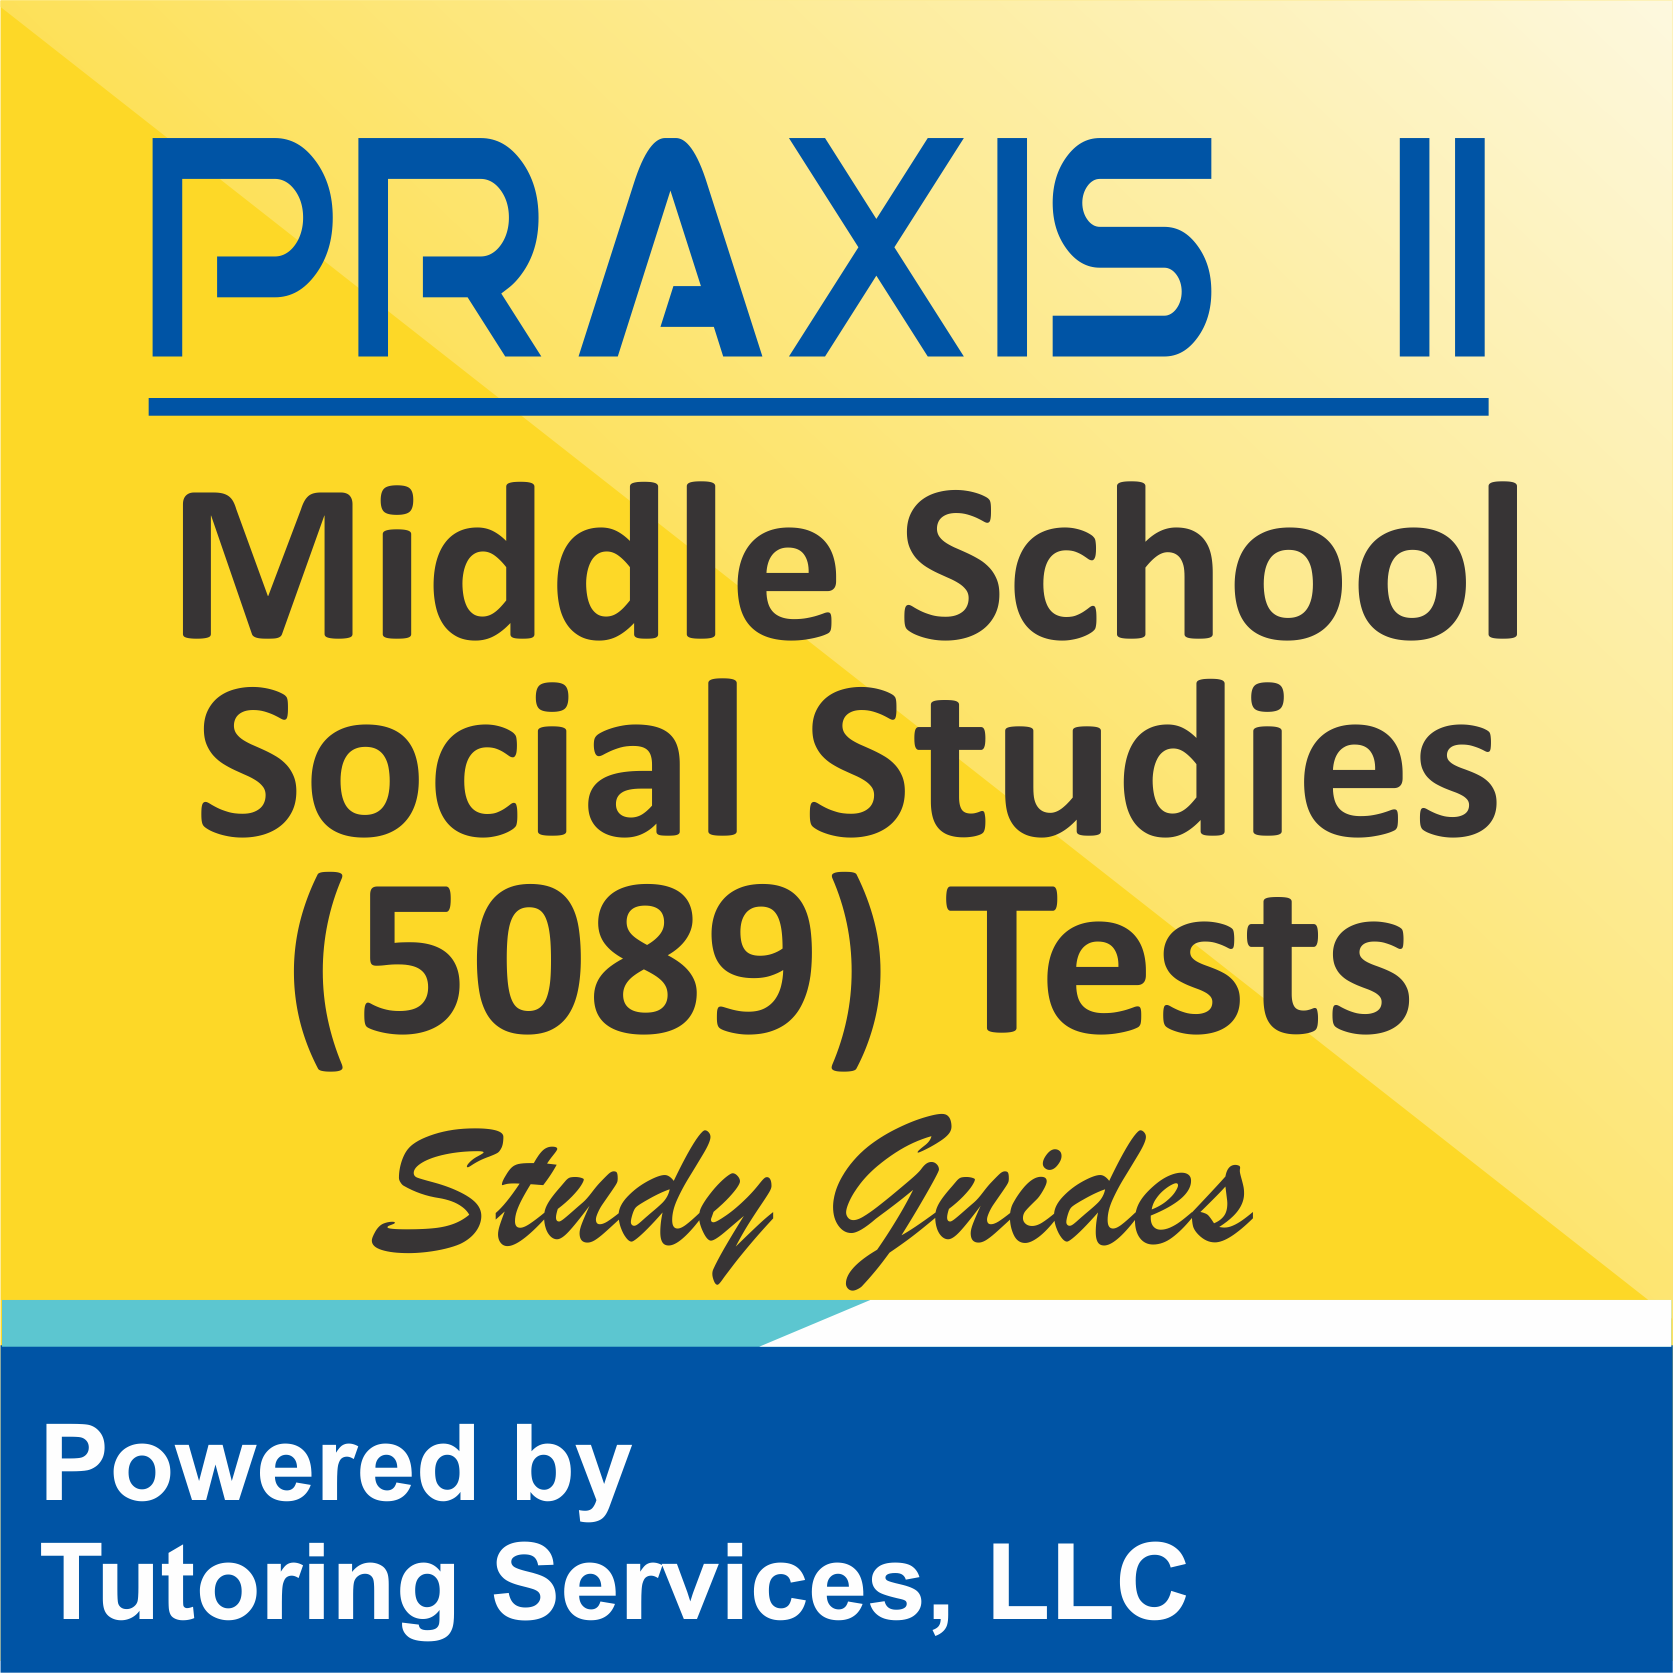 Praxis II Middle School: Social Studies (5089) Test Syllabus